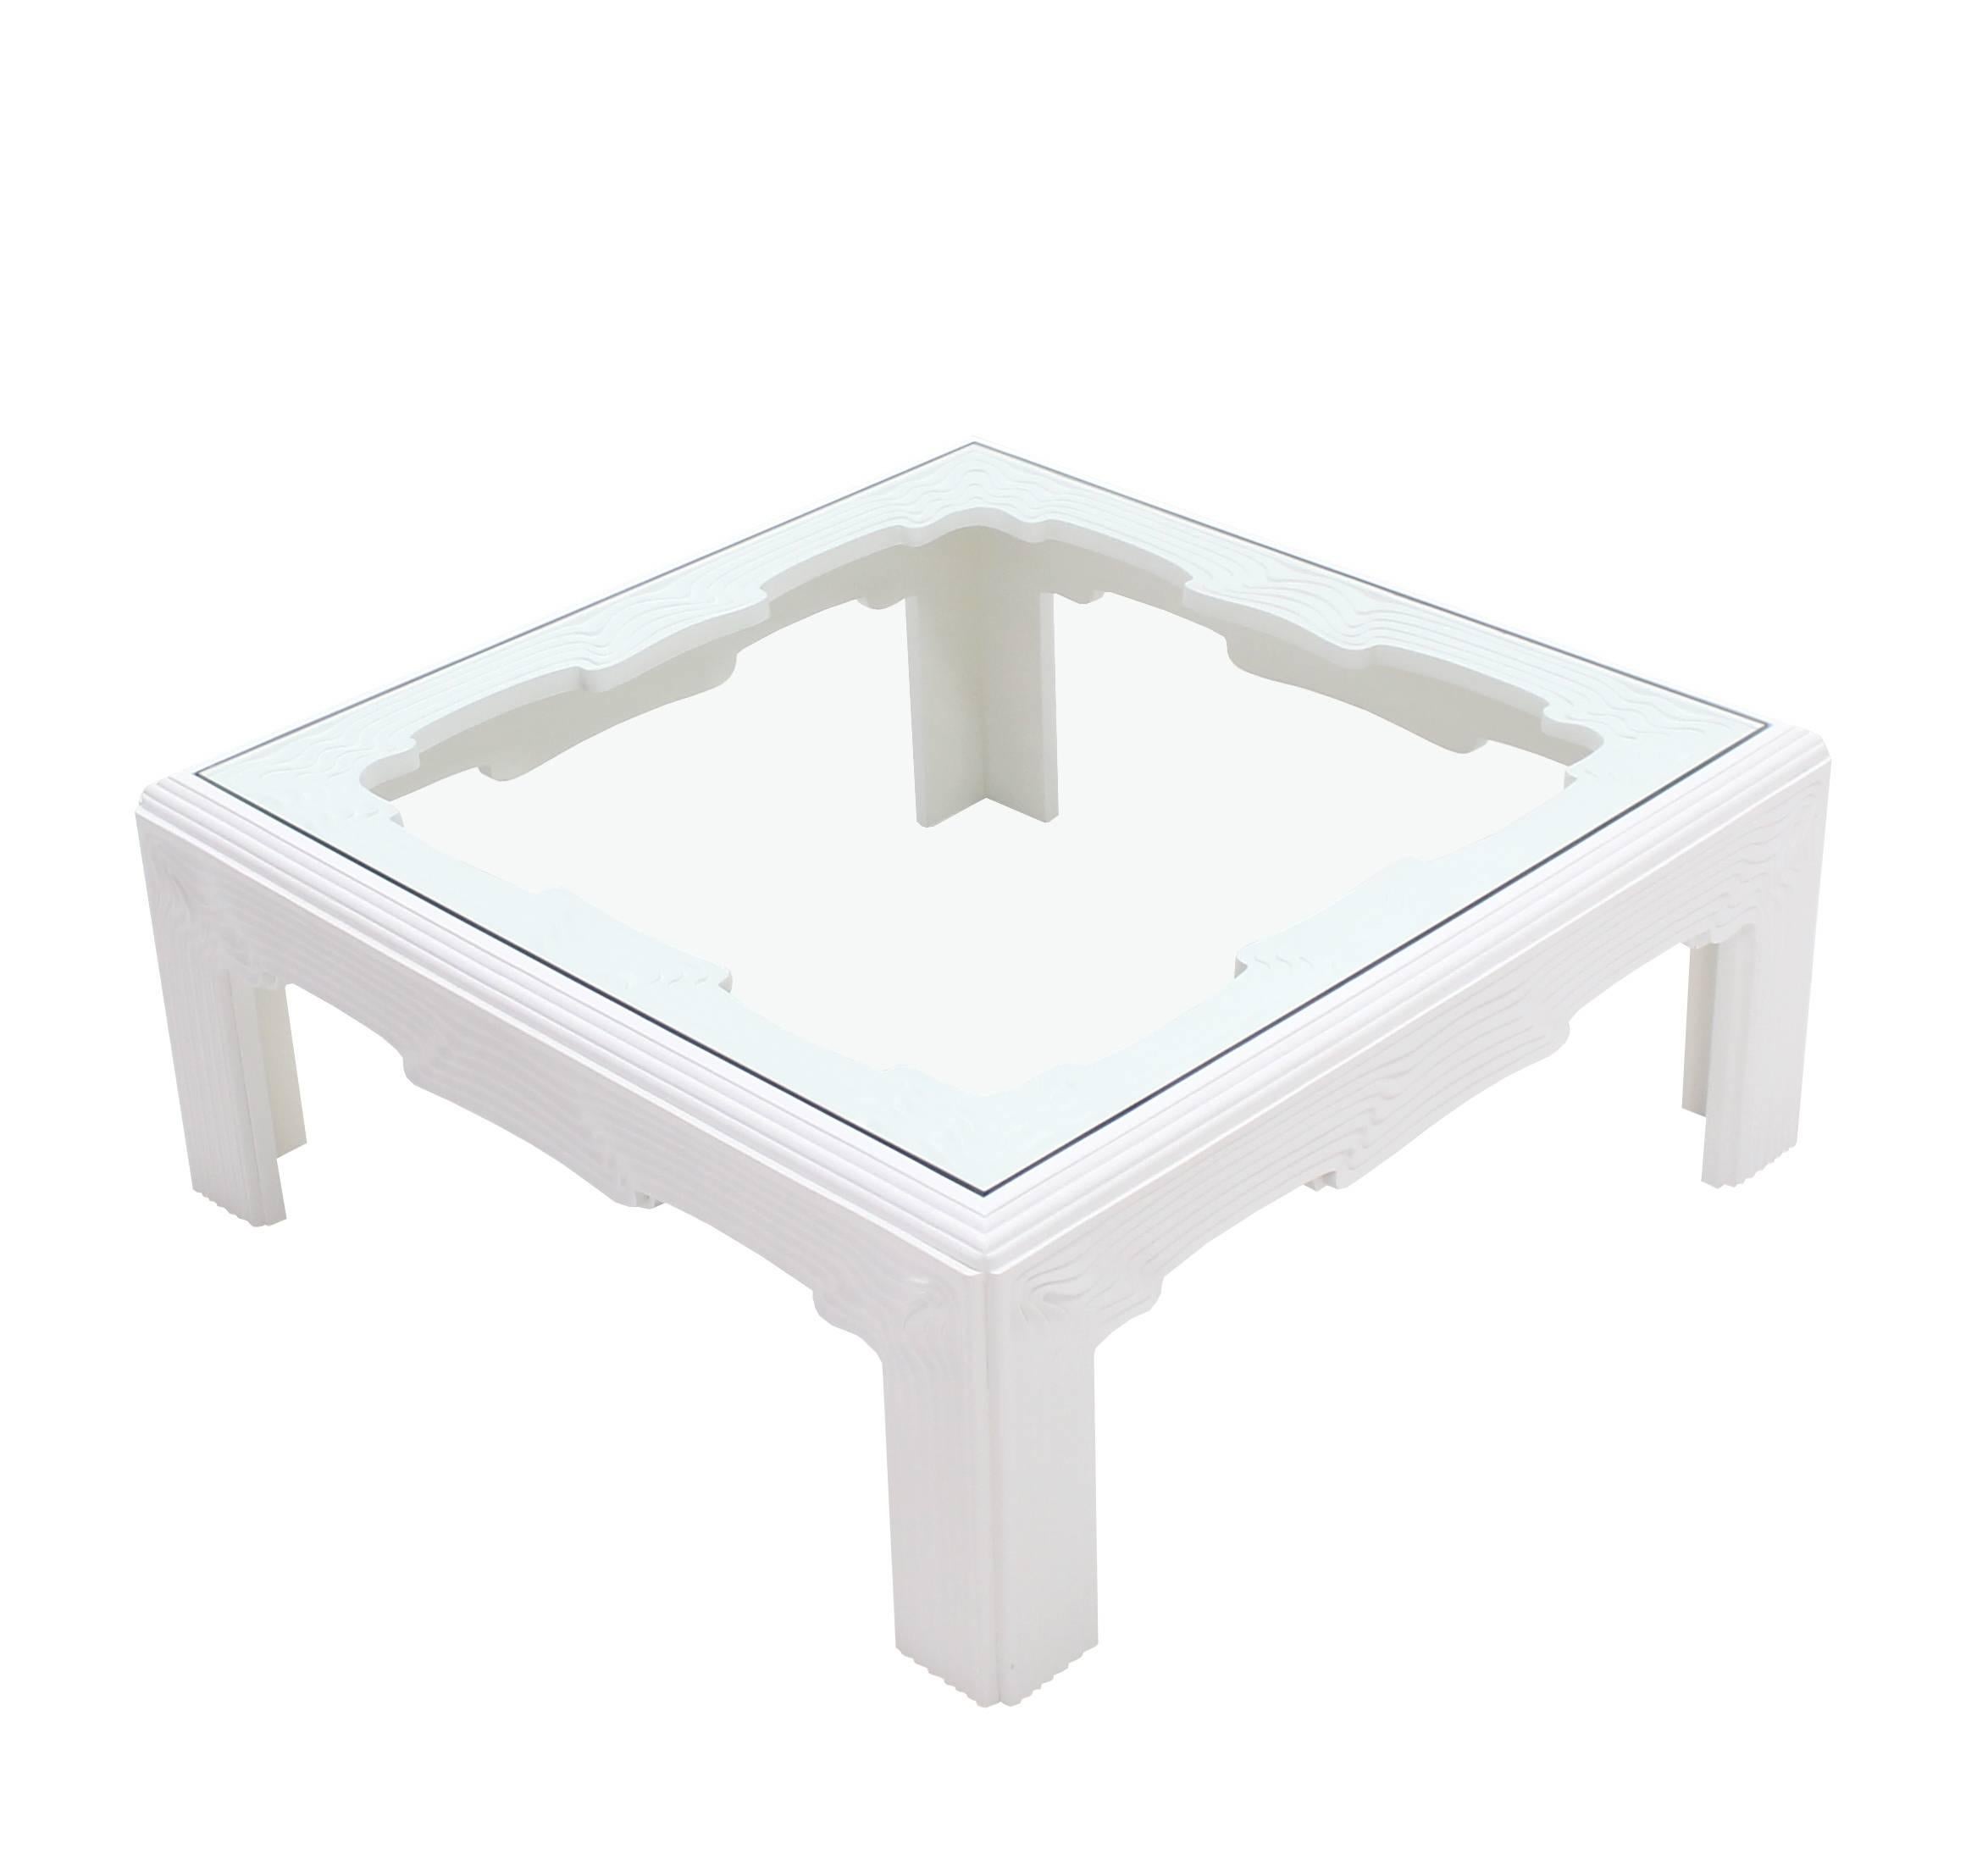 square lacquer coffee table